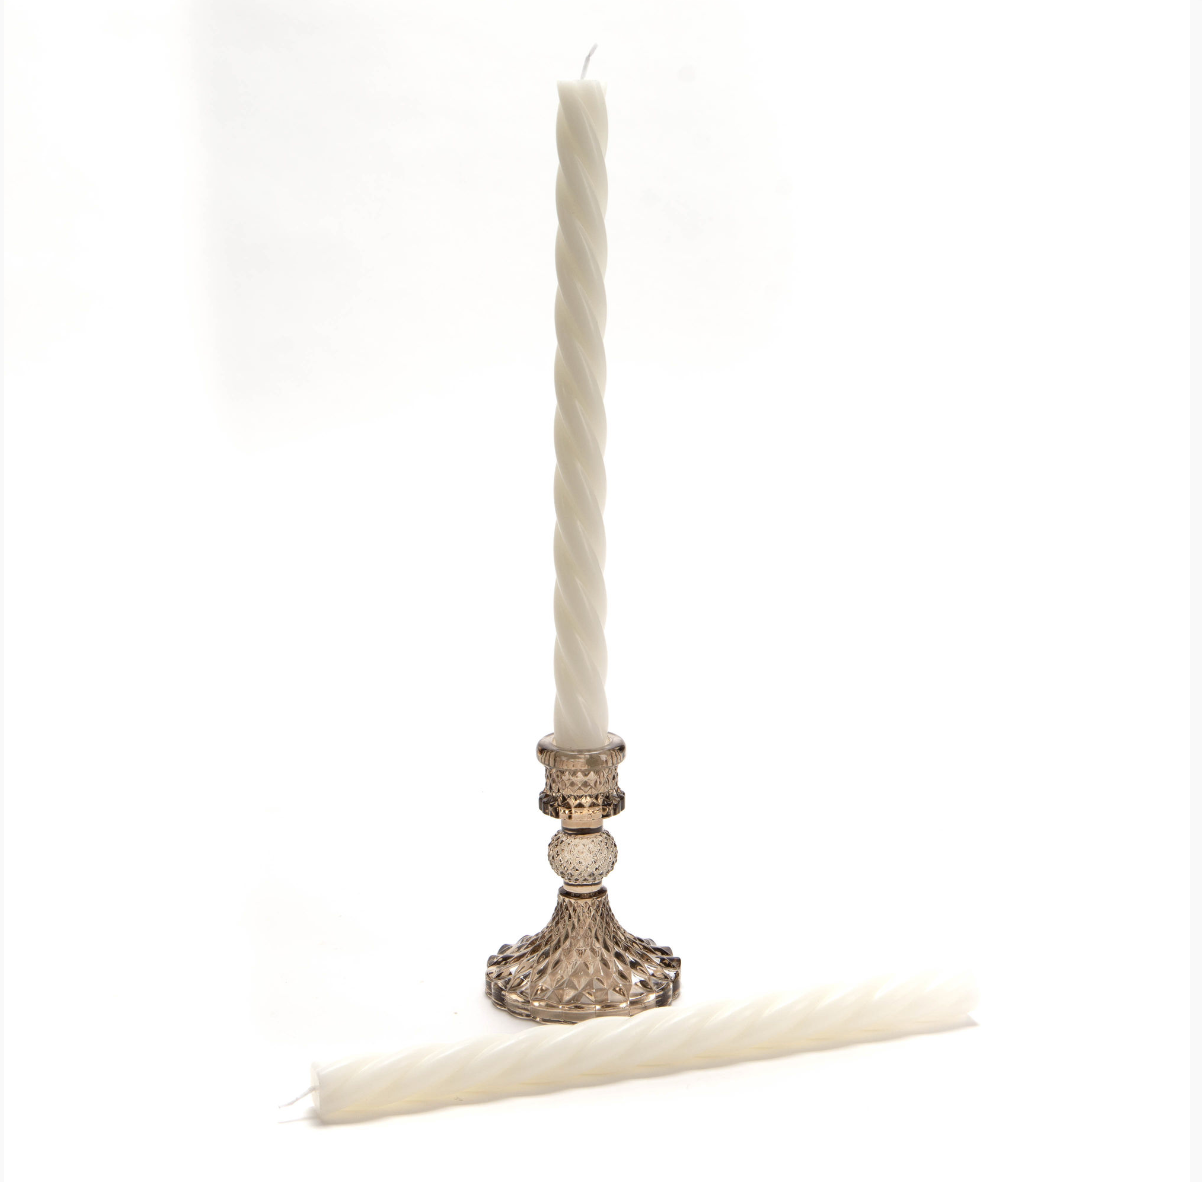 Long twisted candles "Chand Torsa" (2pcs)